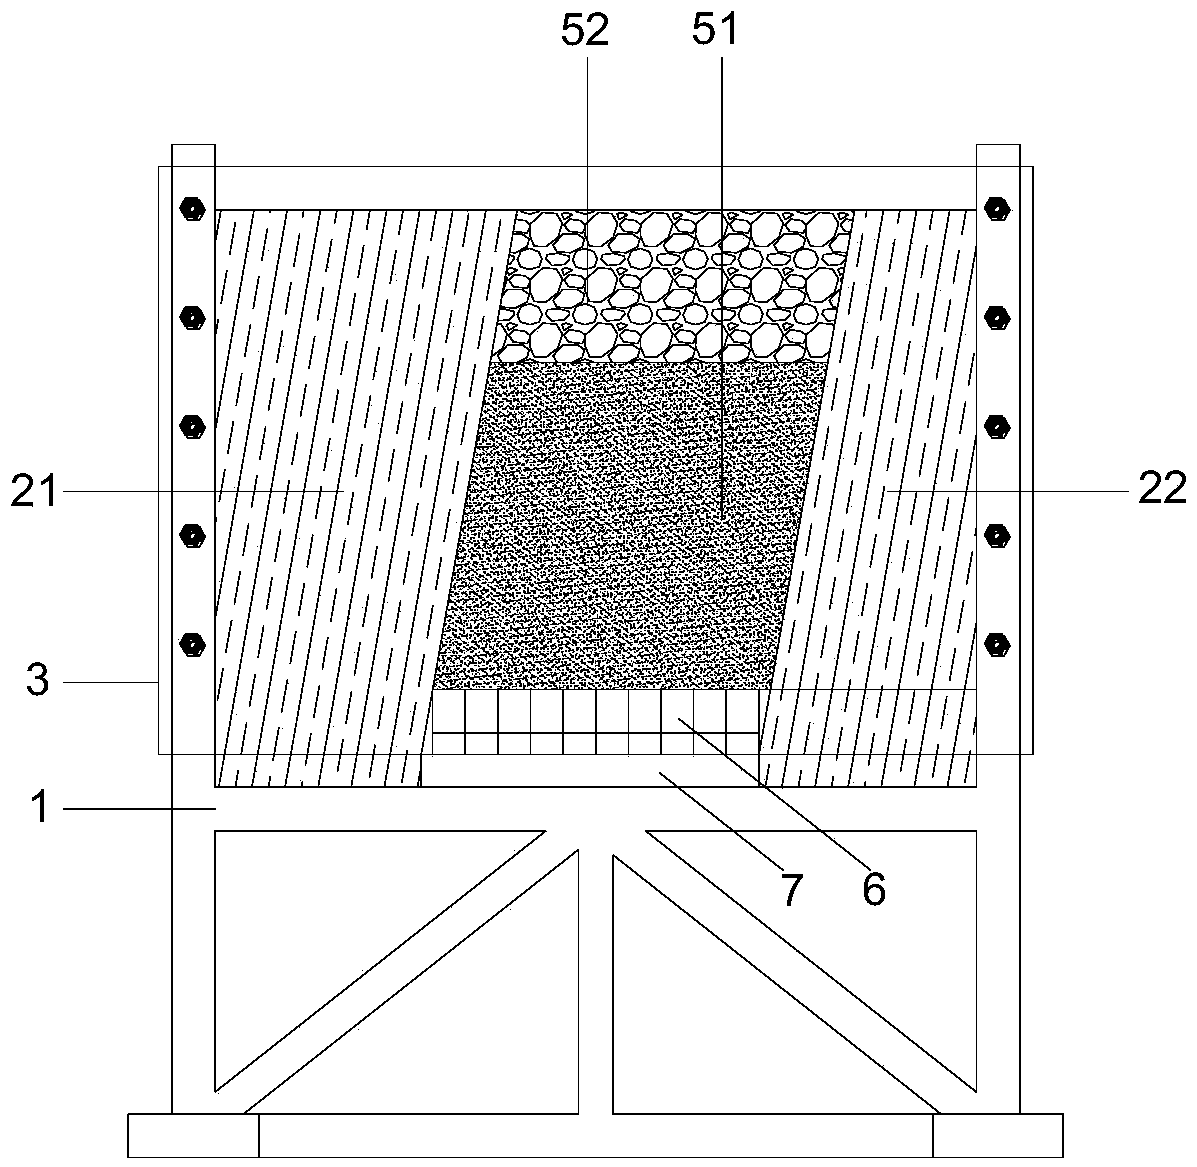 Steeply inclined coal seam horizontal segmentation full-mechanized caving mining simulation experiment table and method